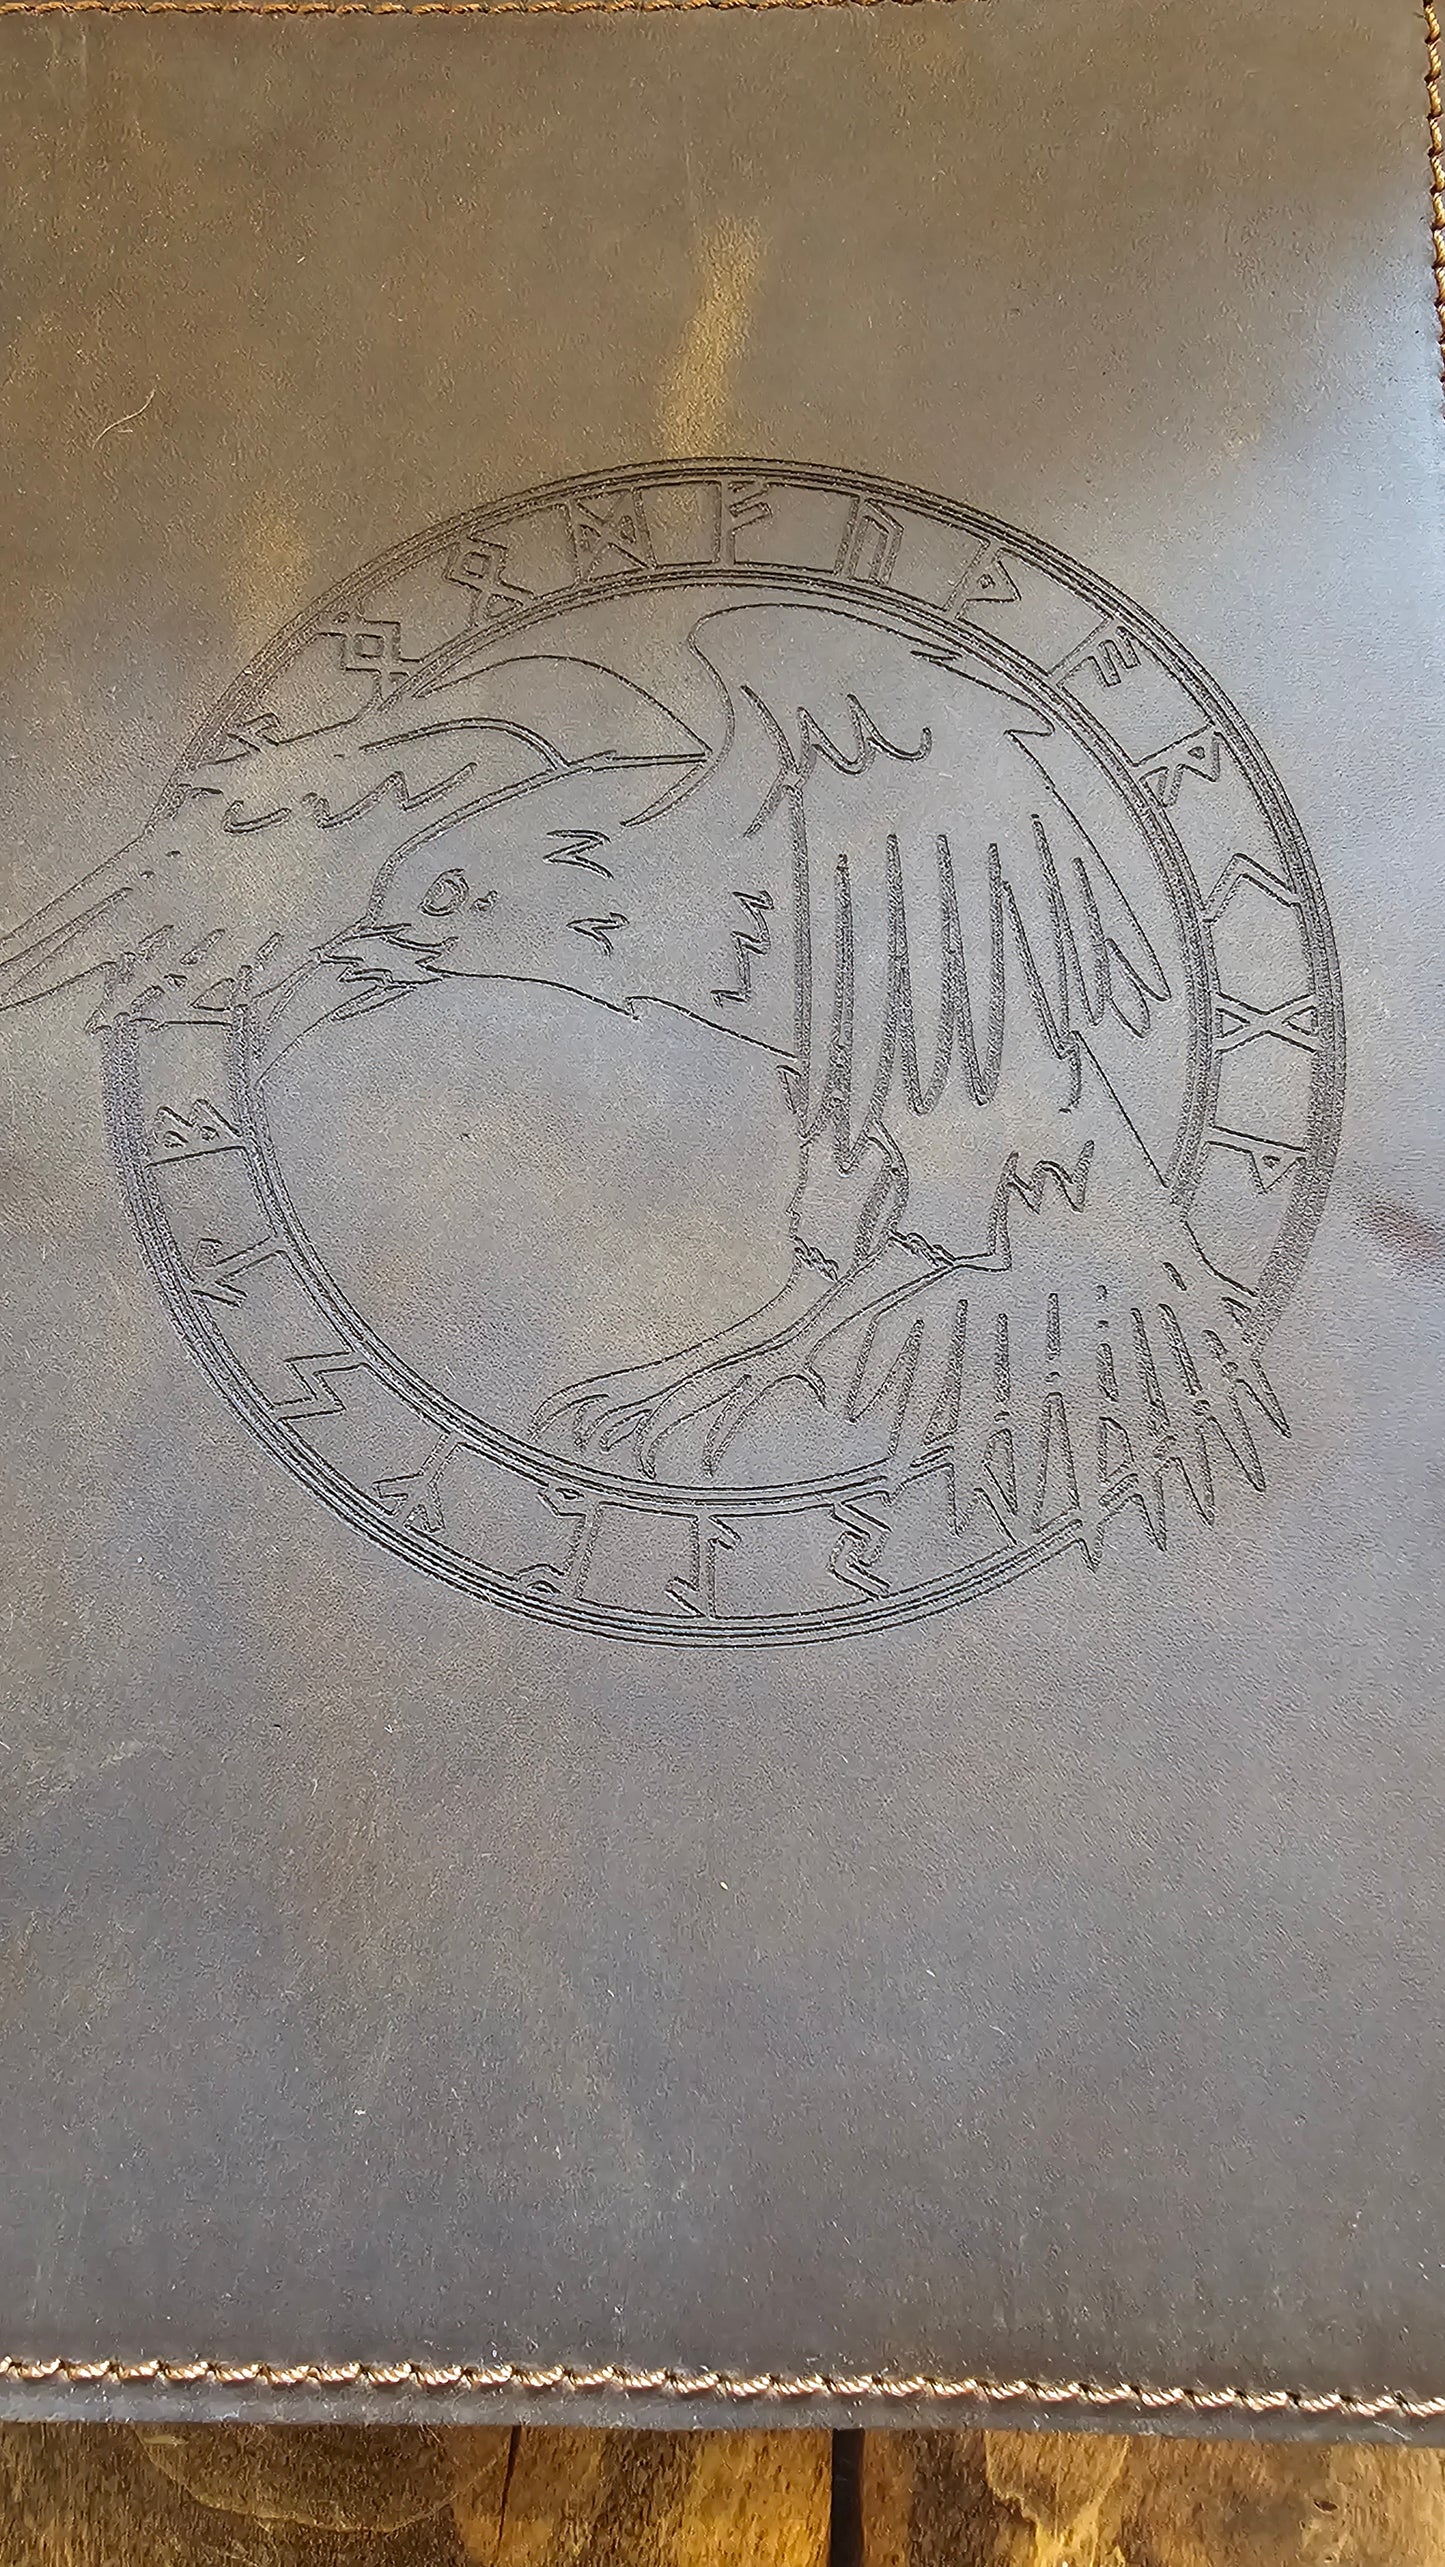 Genuine Leather Journal- Nordic Raven